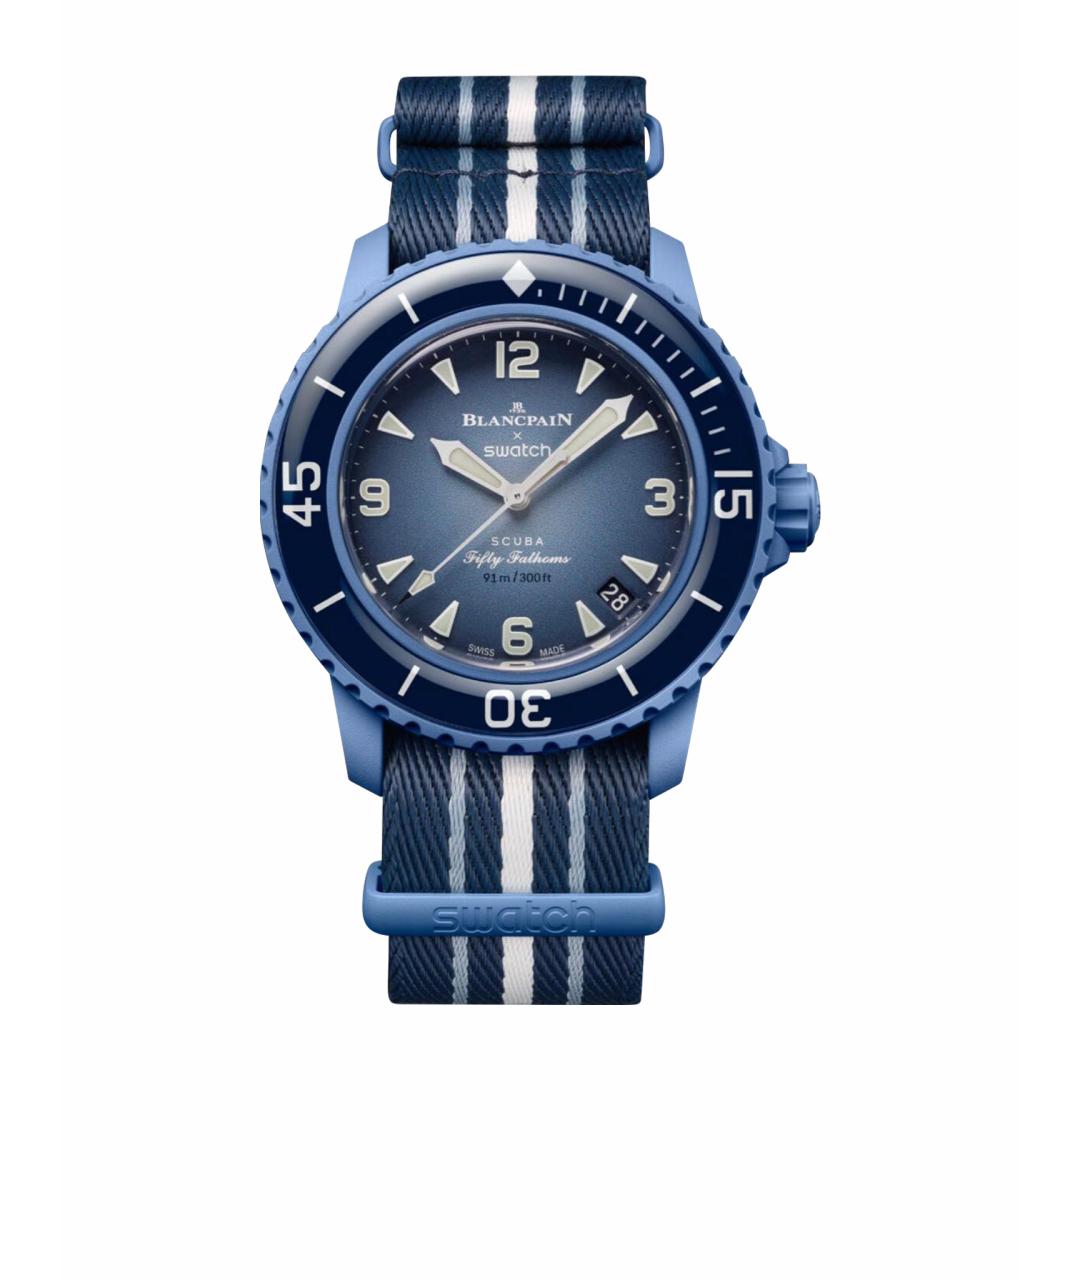 Blancpain Синие керамические часы, фото 1